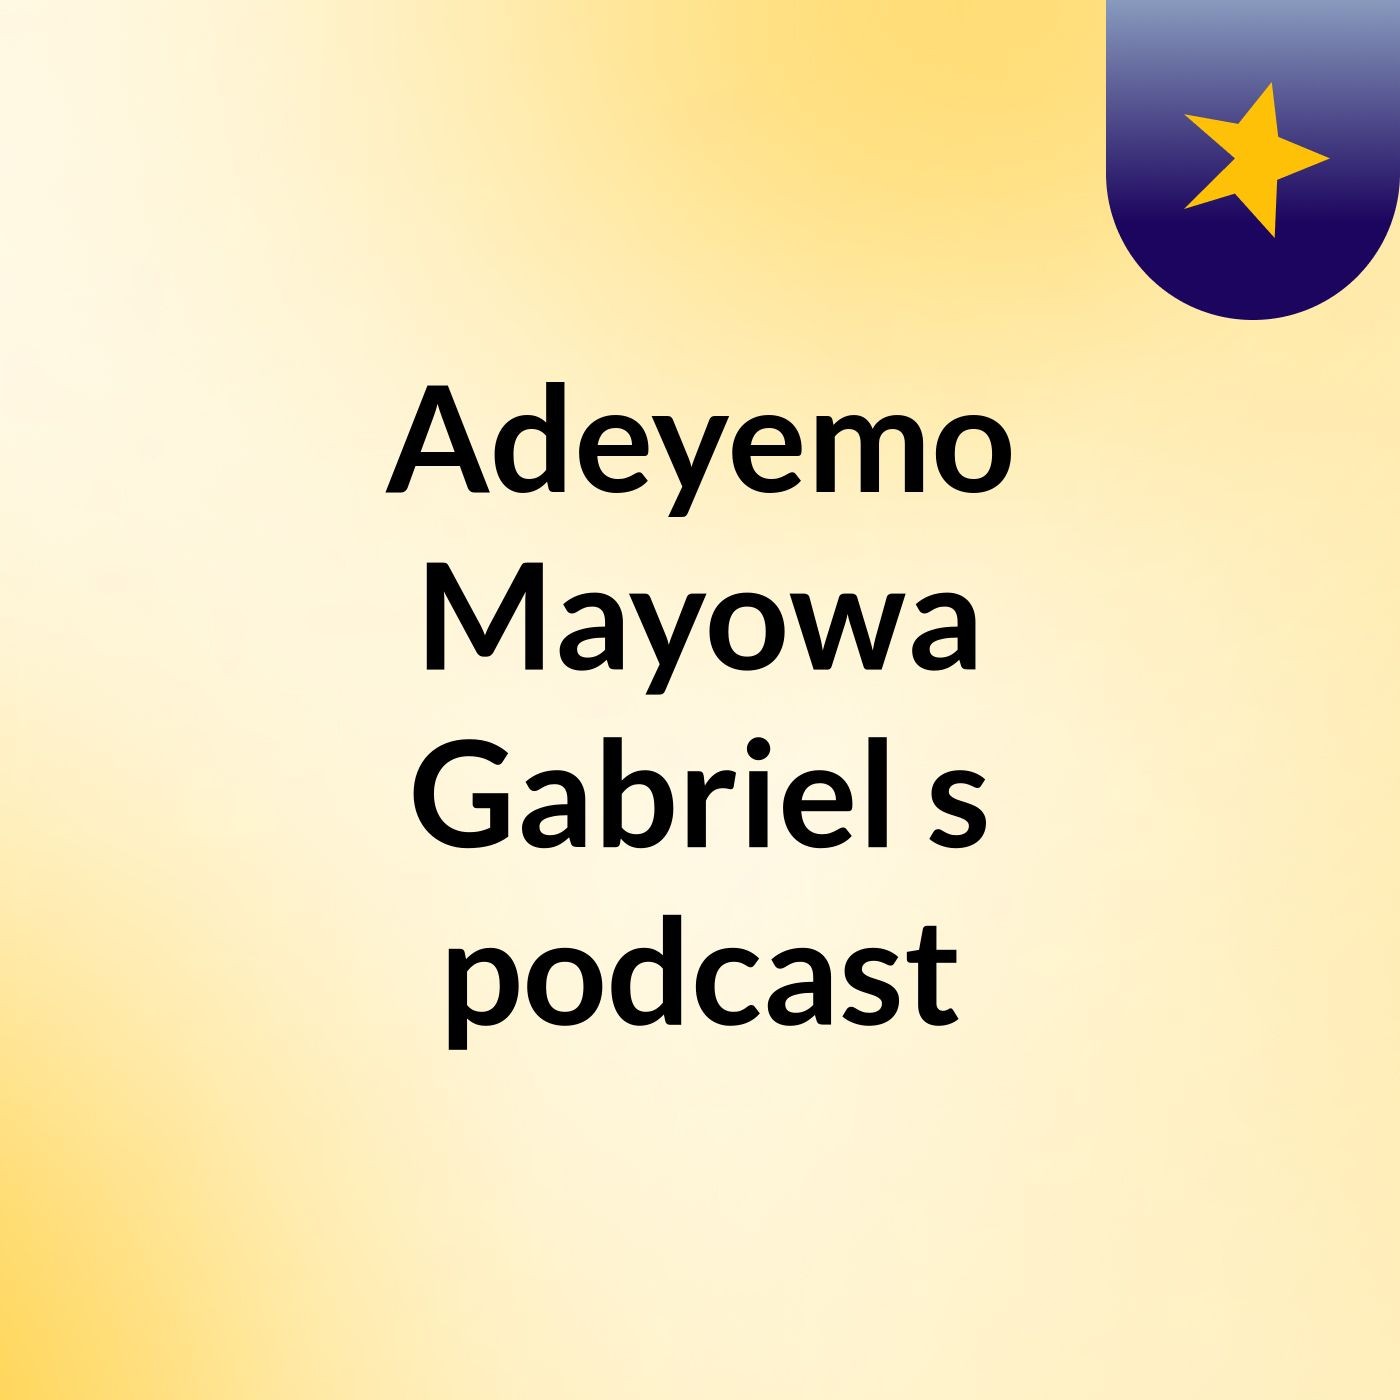 Episode 5 - Adeyemo Mayowa Gabriel's podcast